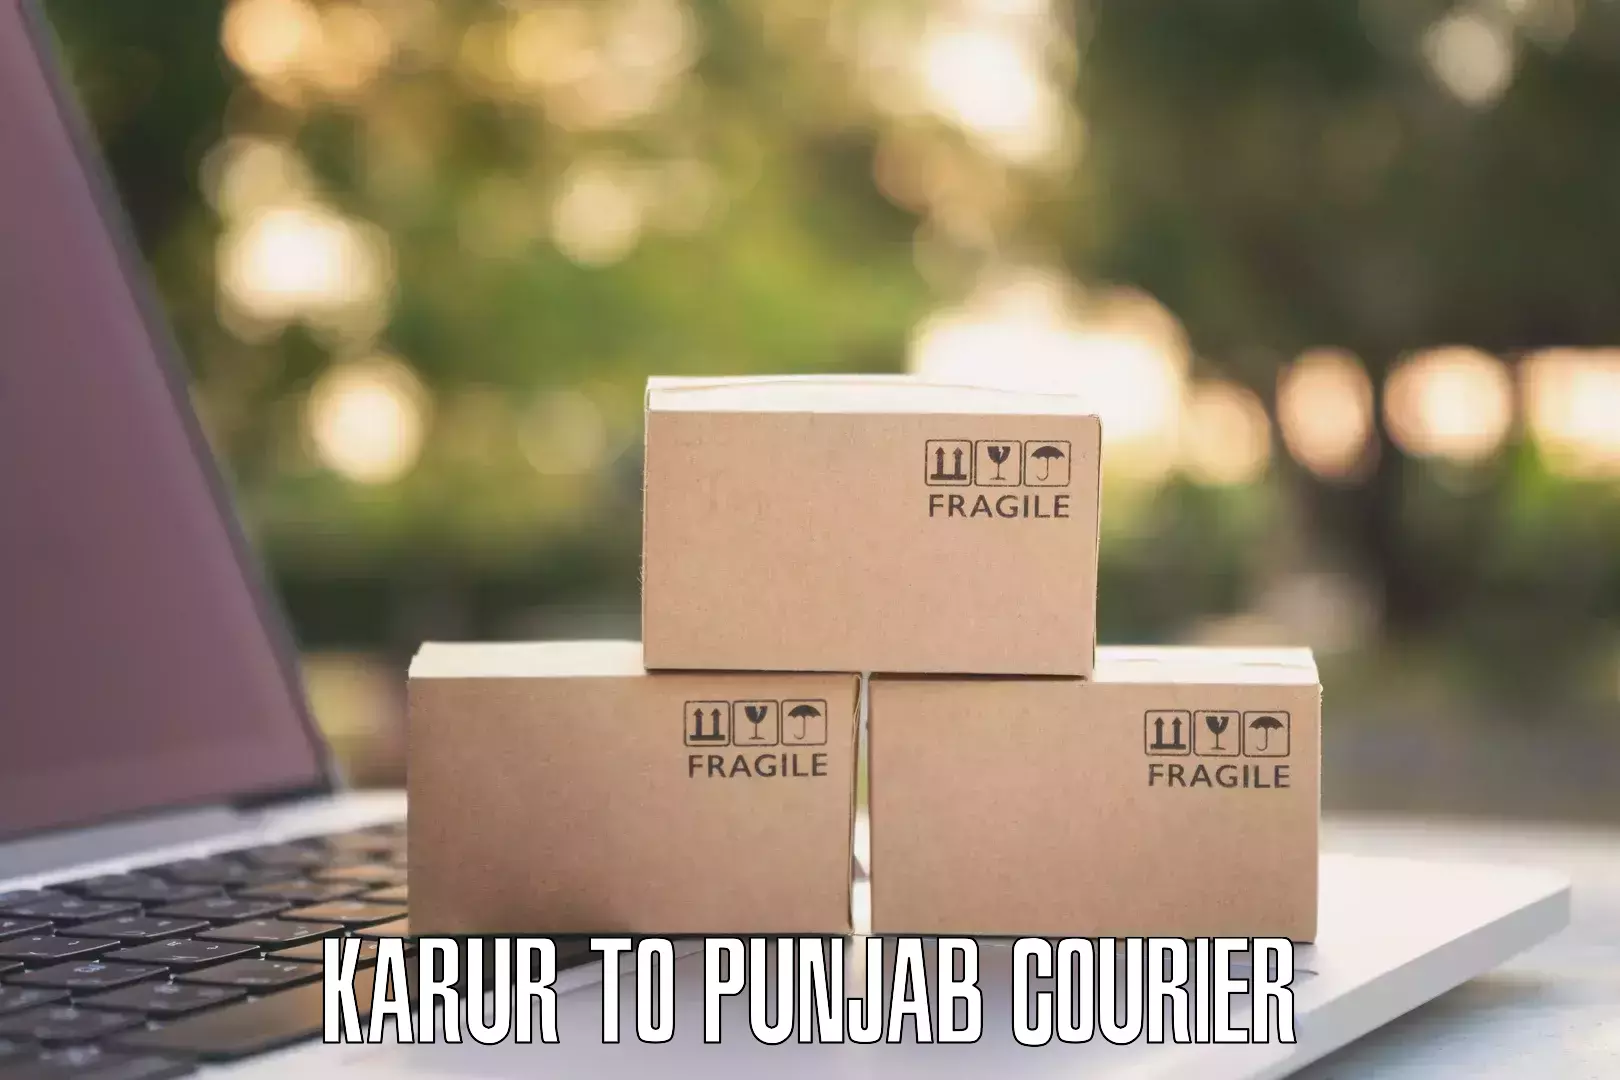 Subscription-based courier Karur to Punjab